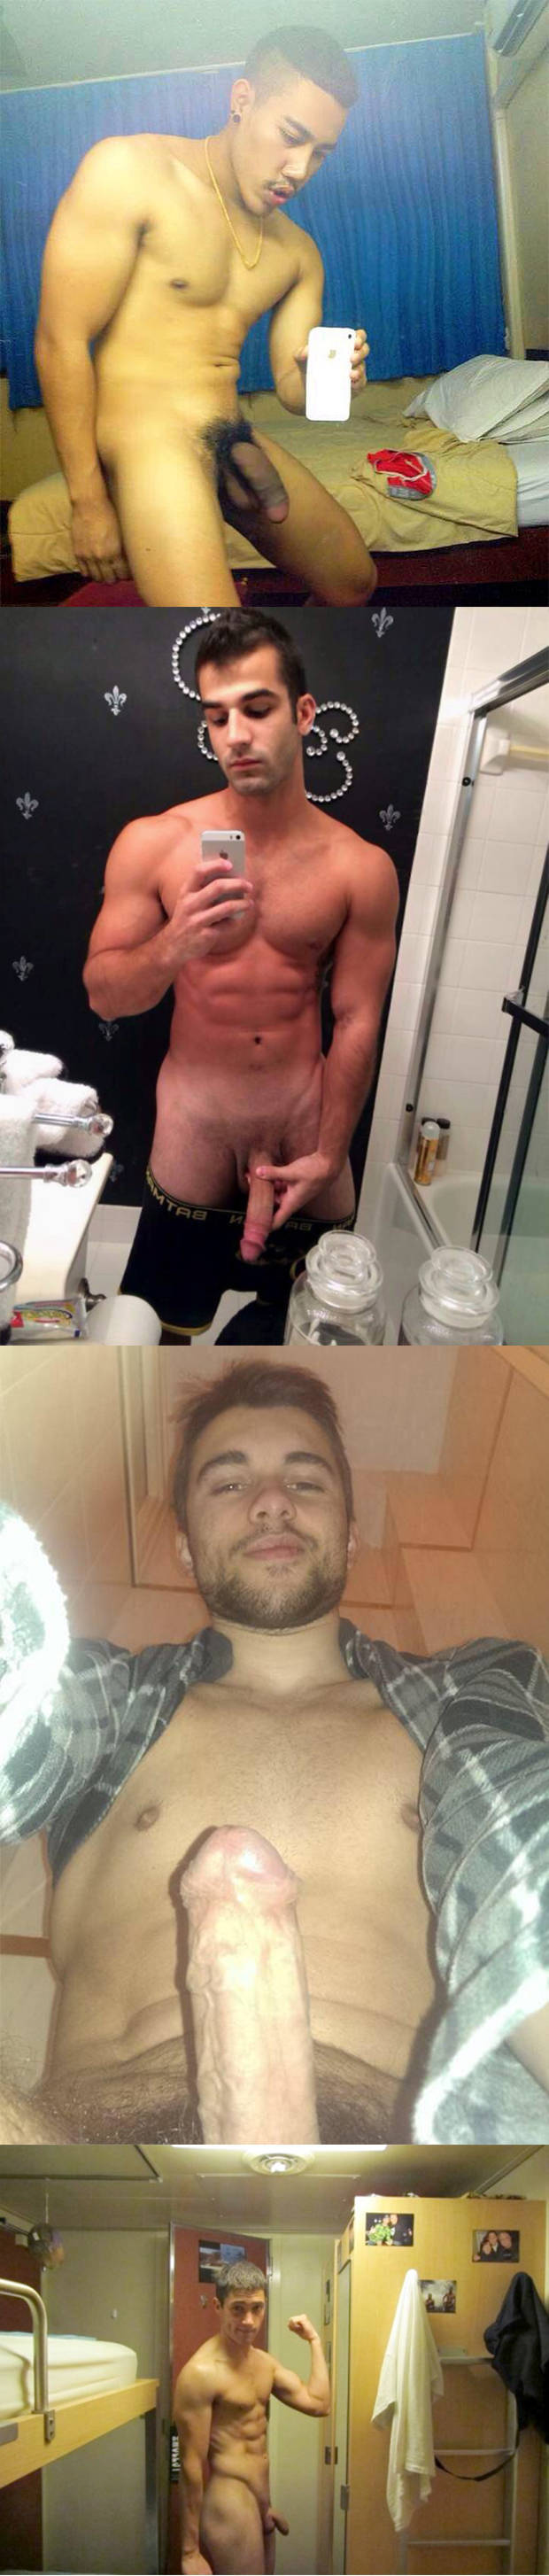 straight guy ass selfie nude gallerie